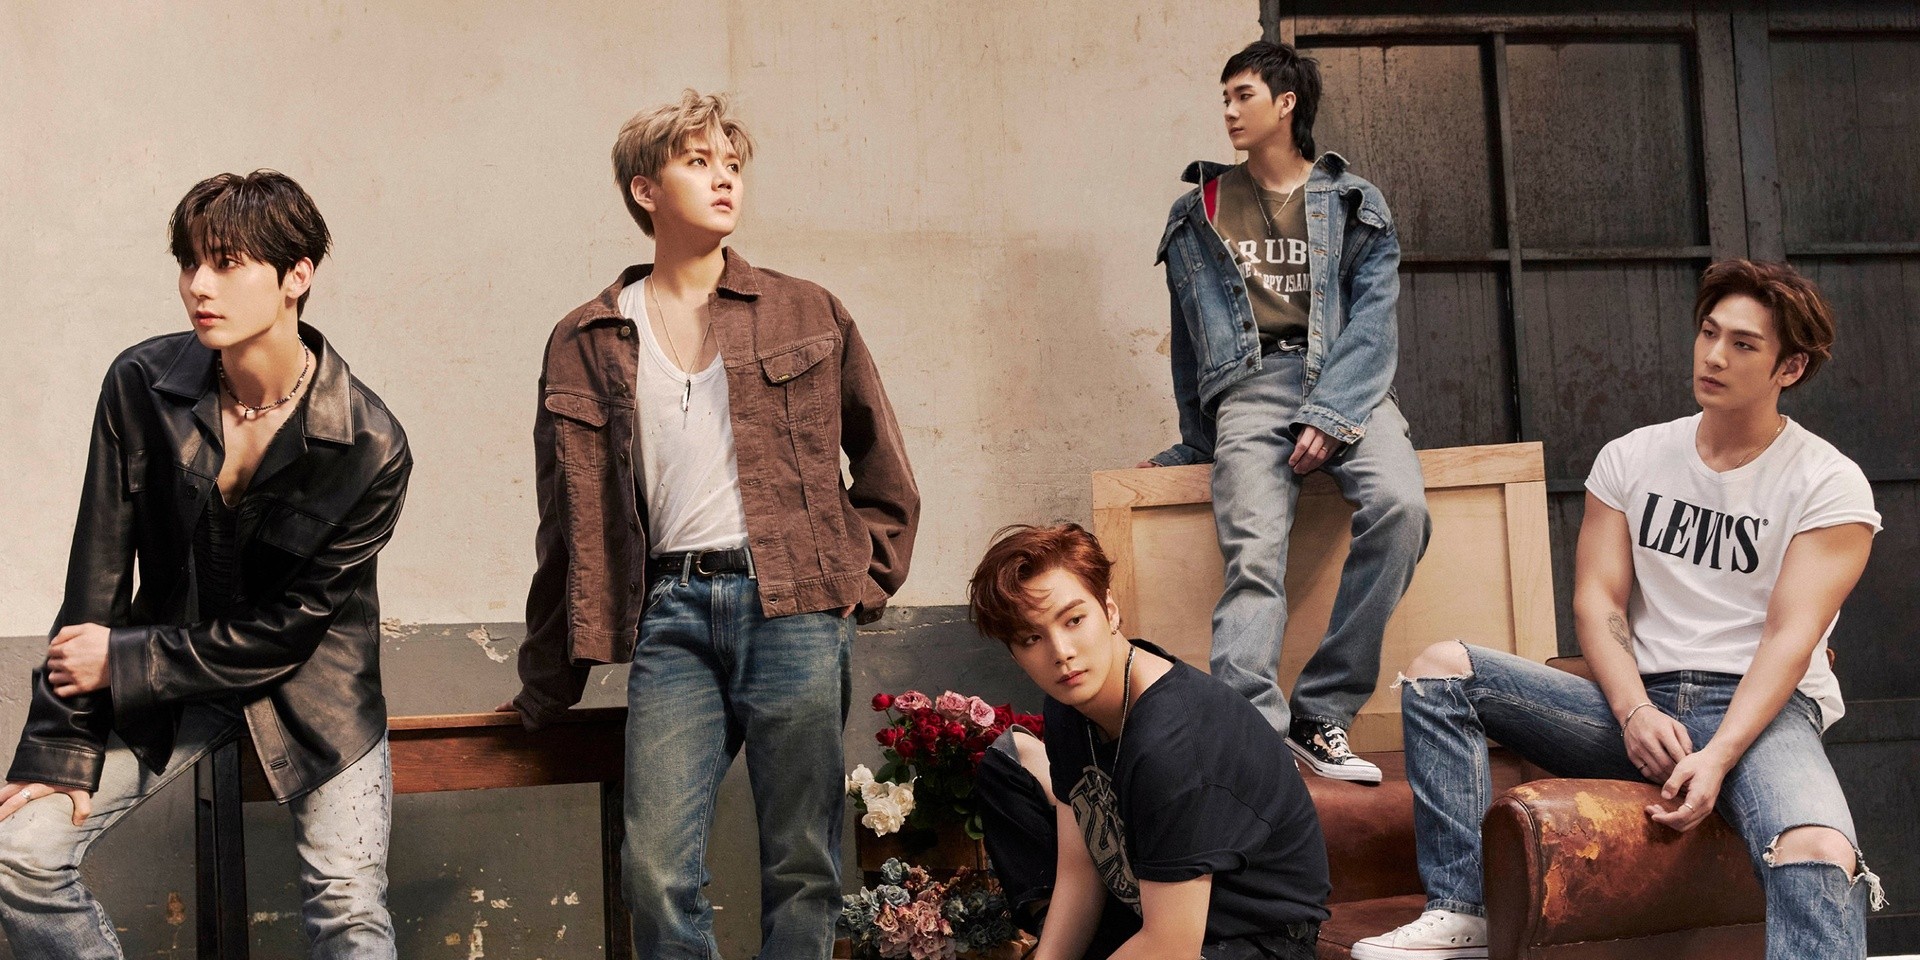 NU'EST showcase almost a decade's worth of growth in their latest album 'Romanticize' – listen